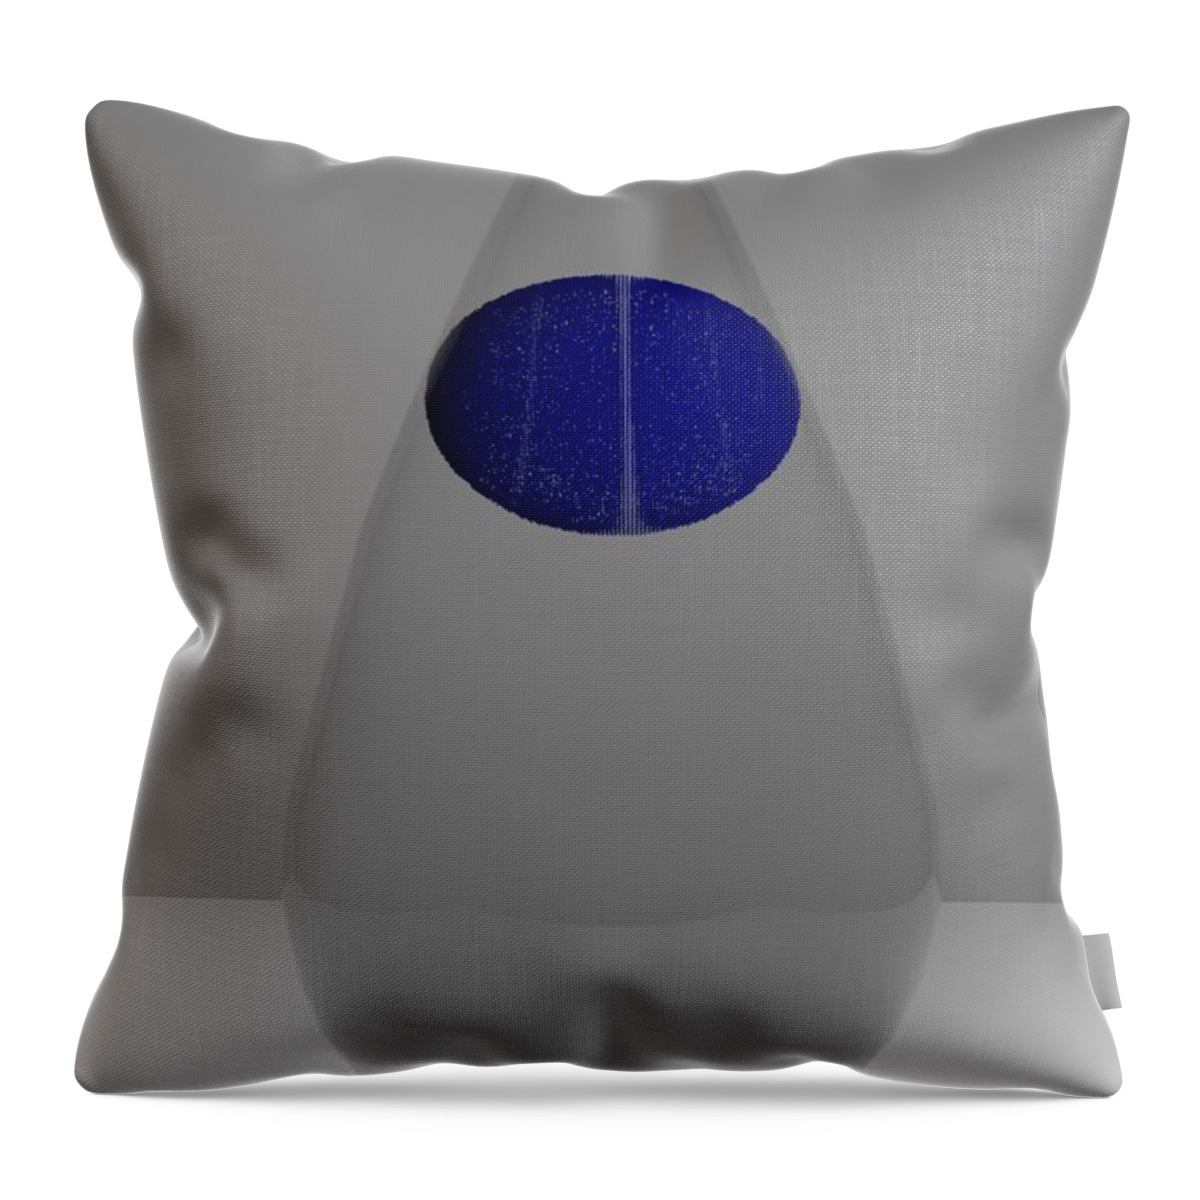 Nft Throw Pillow featuring the digital art 101 Rain Drop by David Bridburg